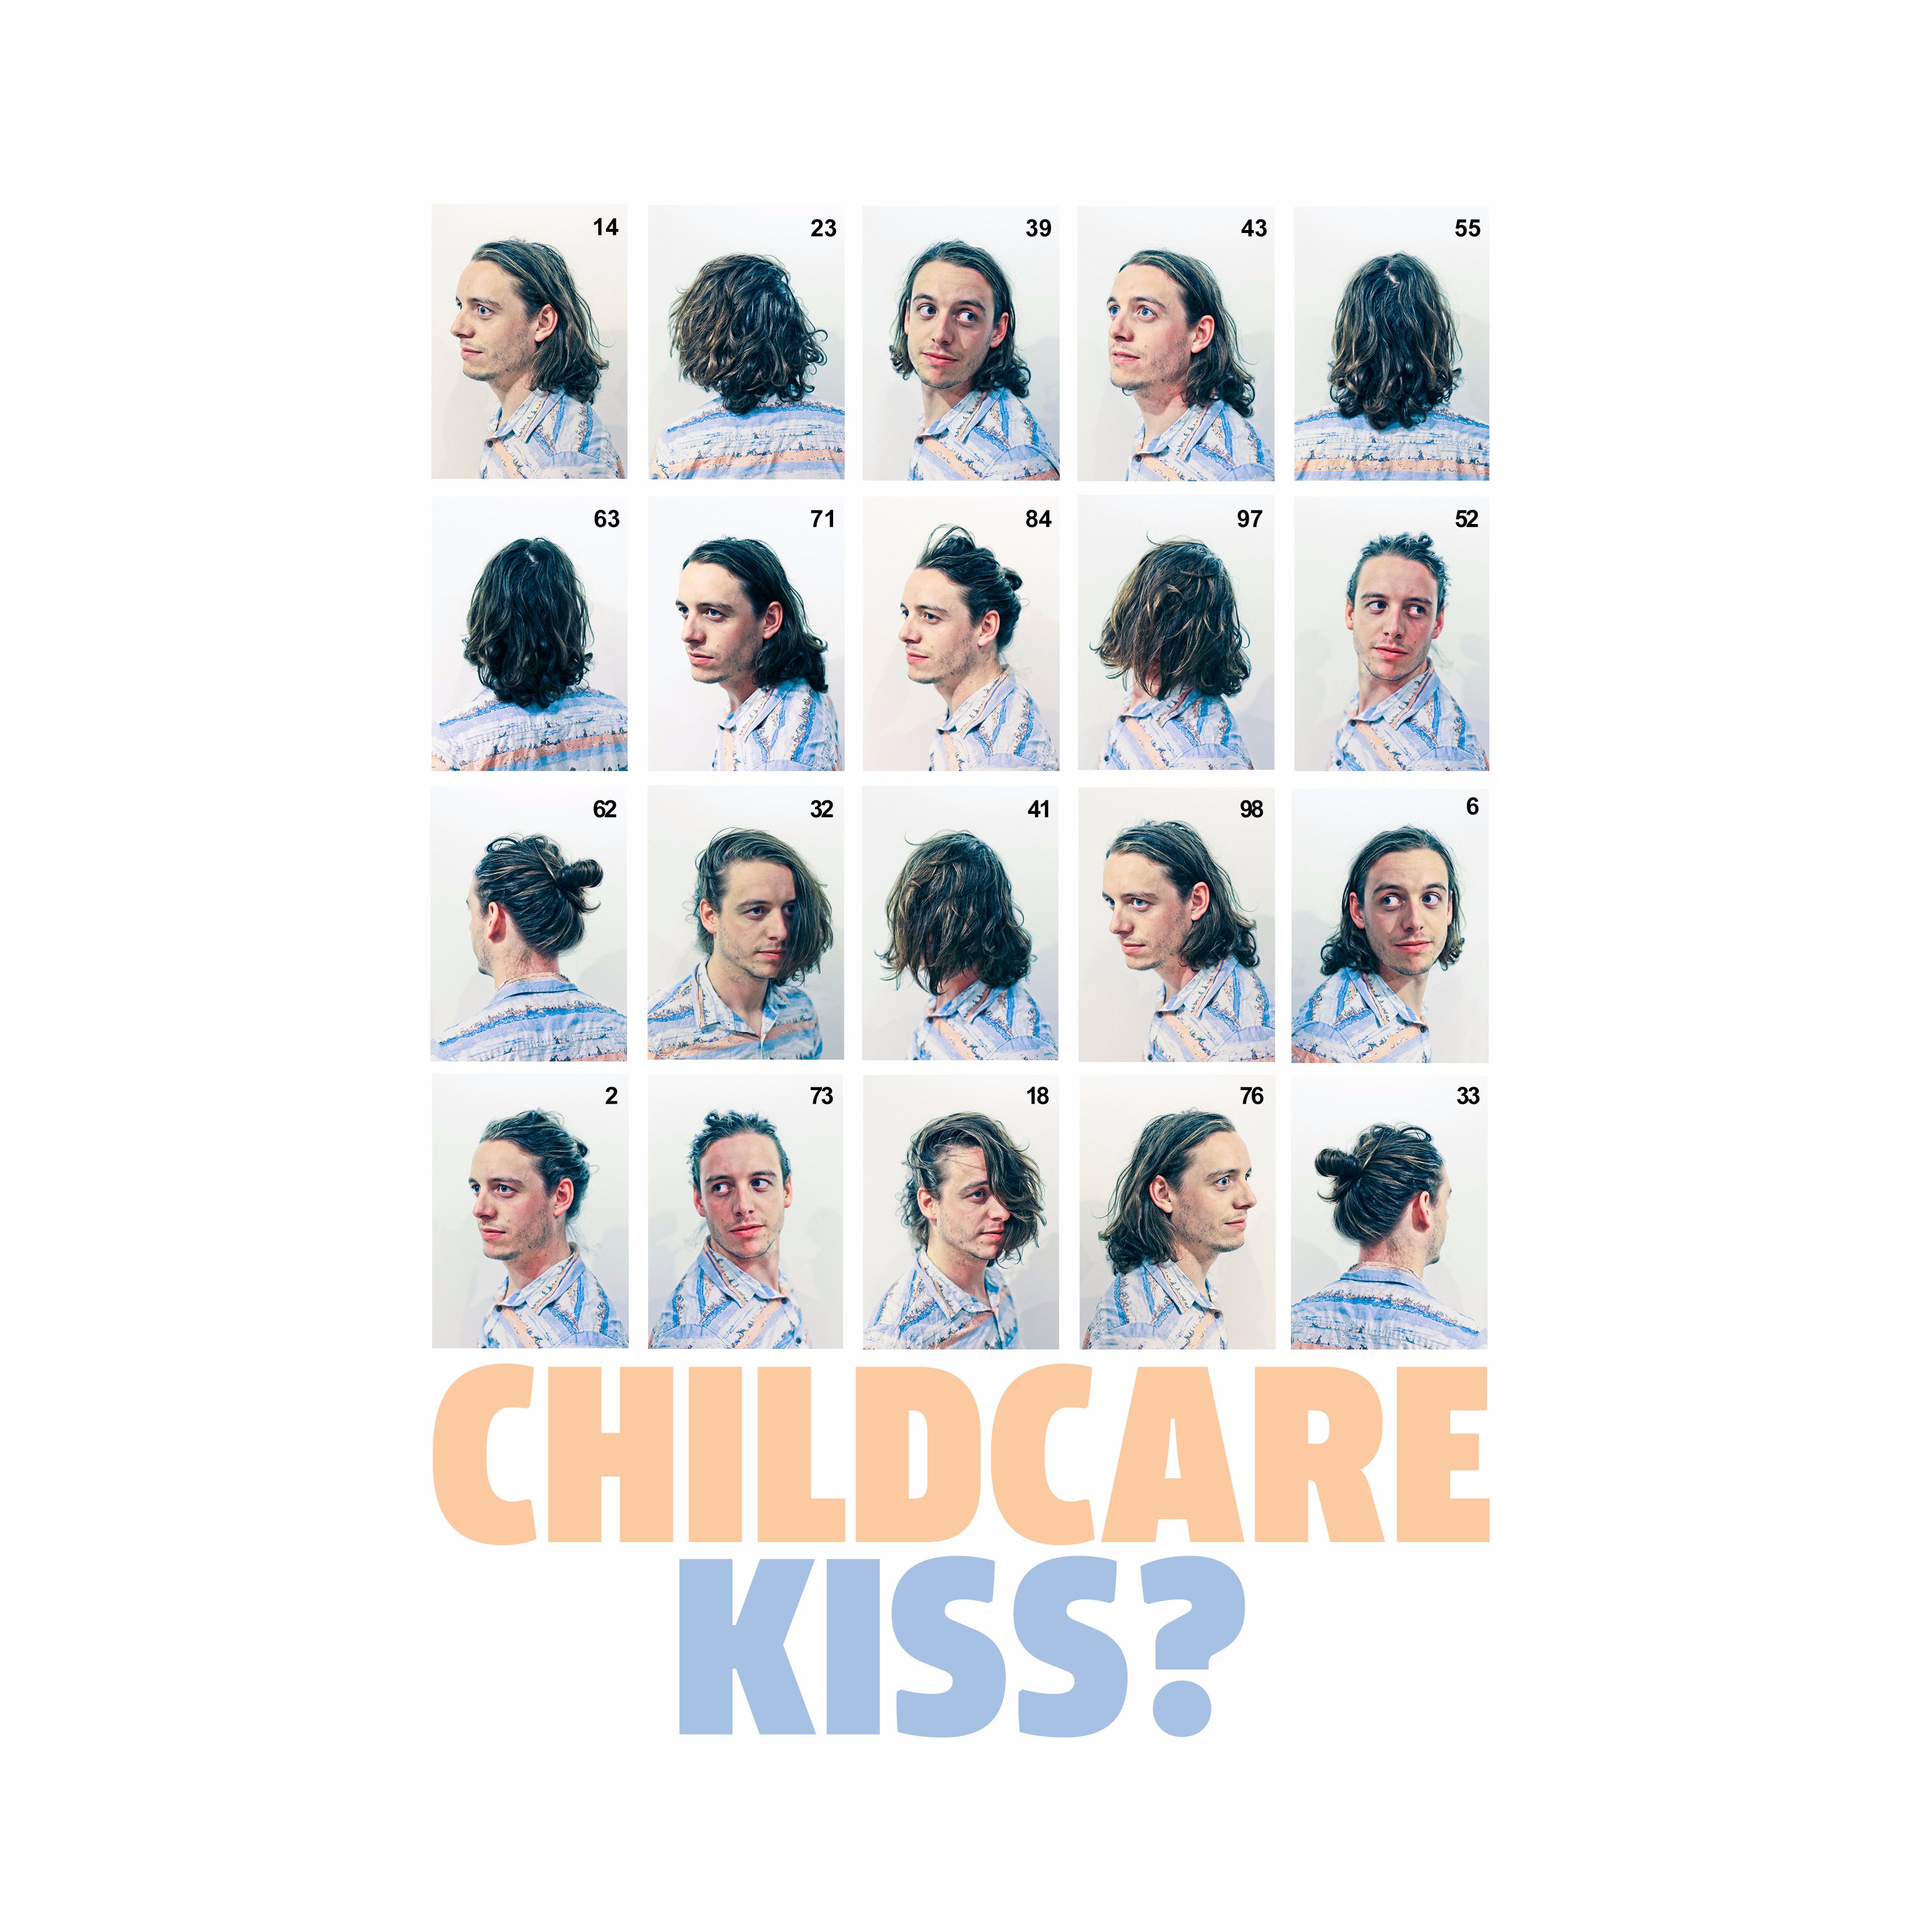 CHILDCARE – “Kiss?”